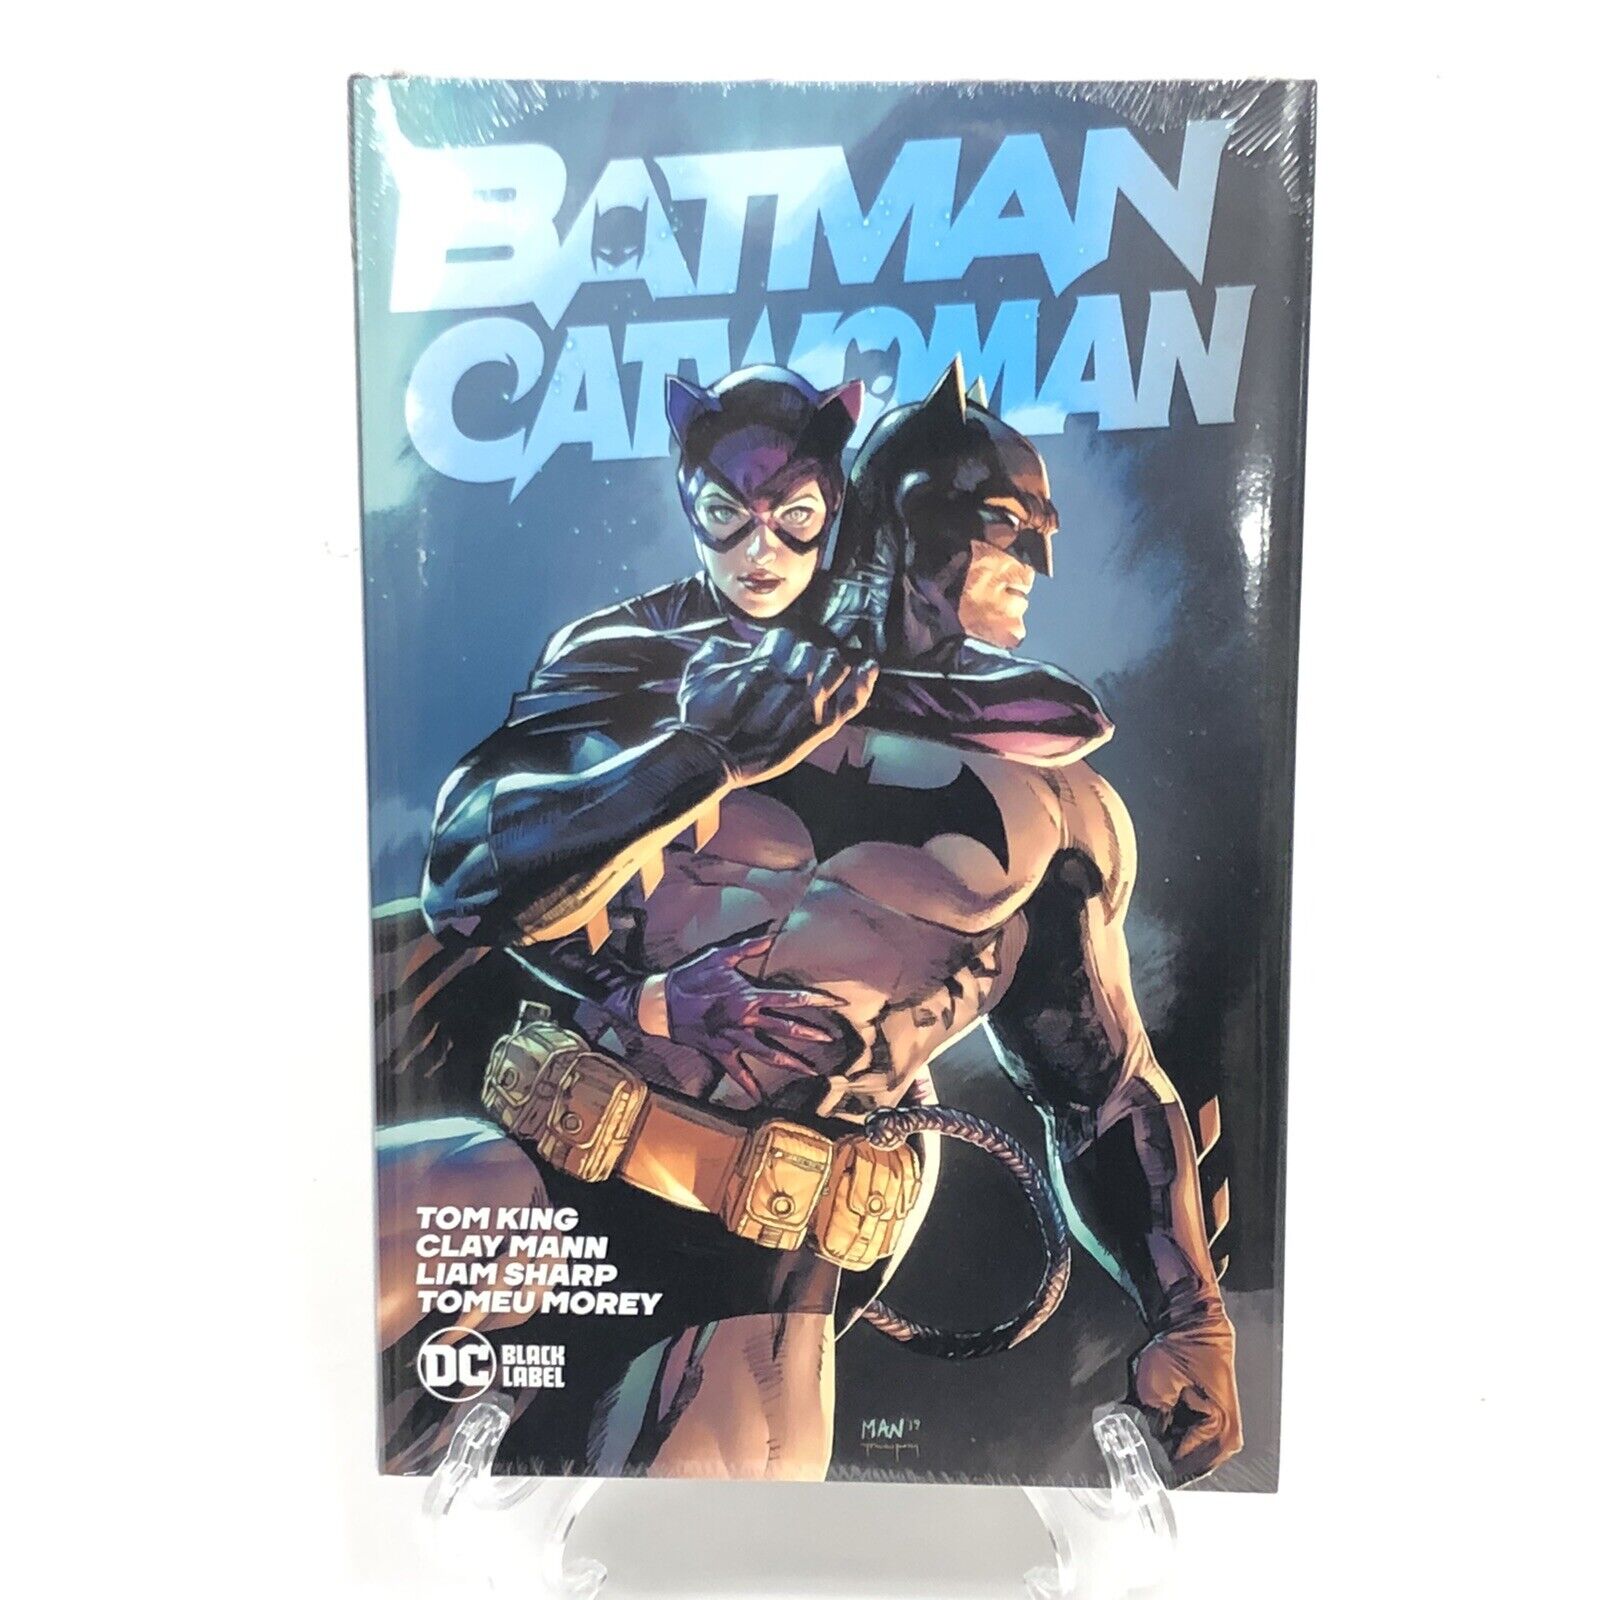 Batman Catwoman by Tom King New DC Comics Black Label HC Hardcover Sealed